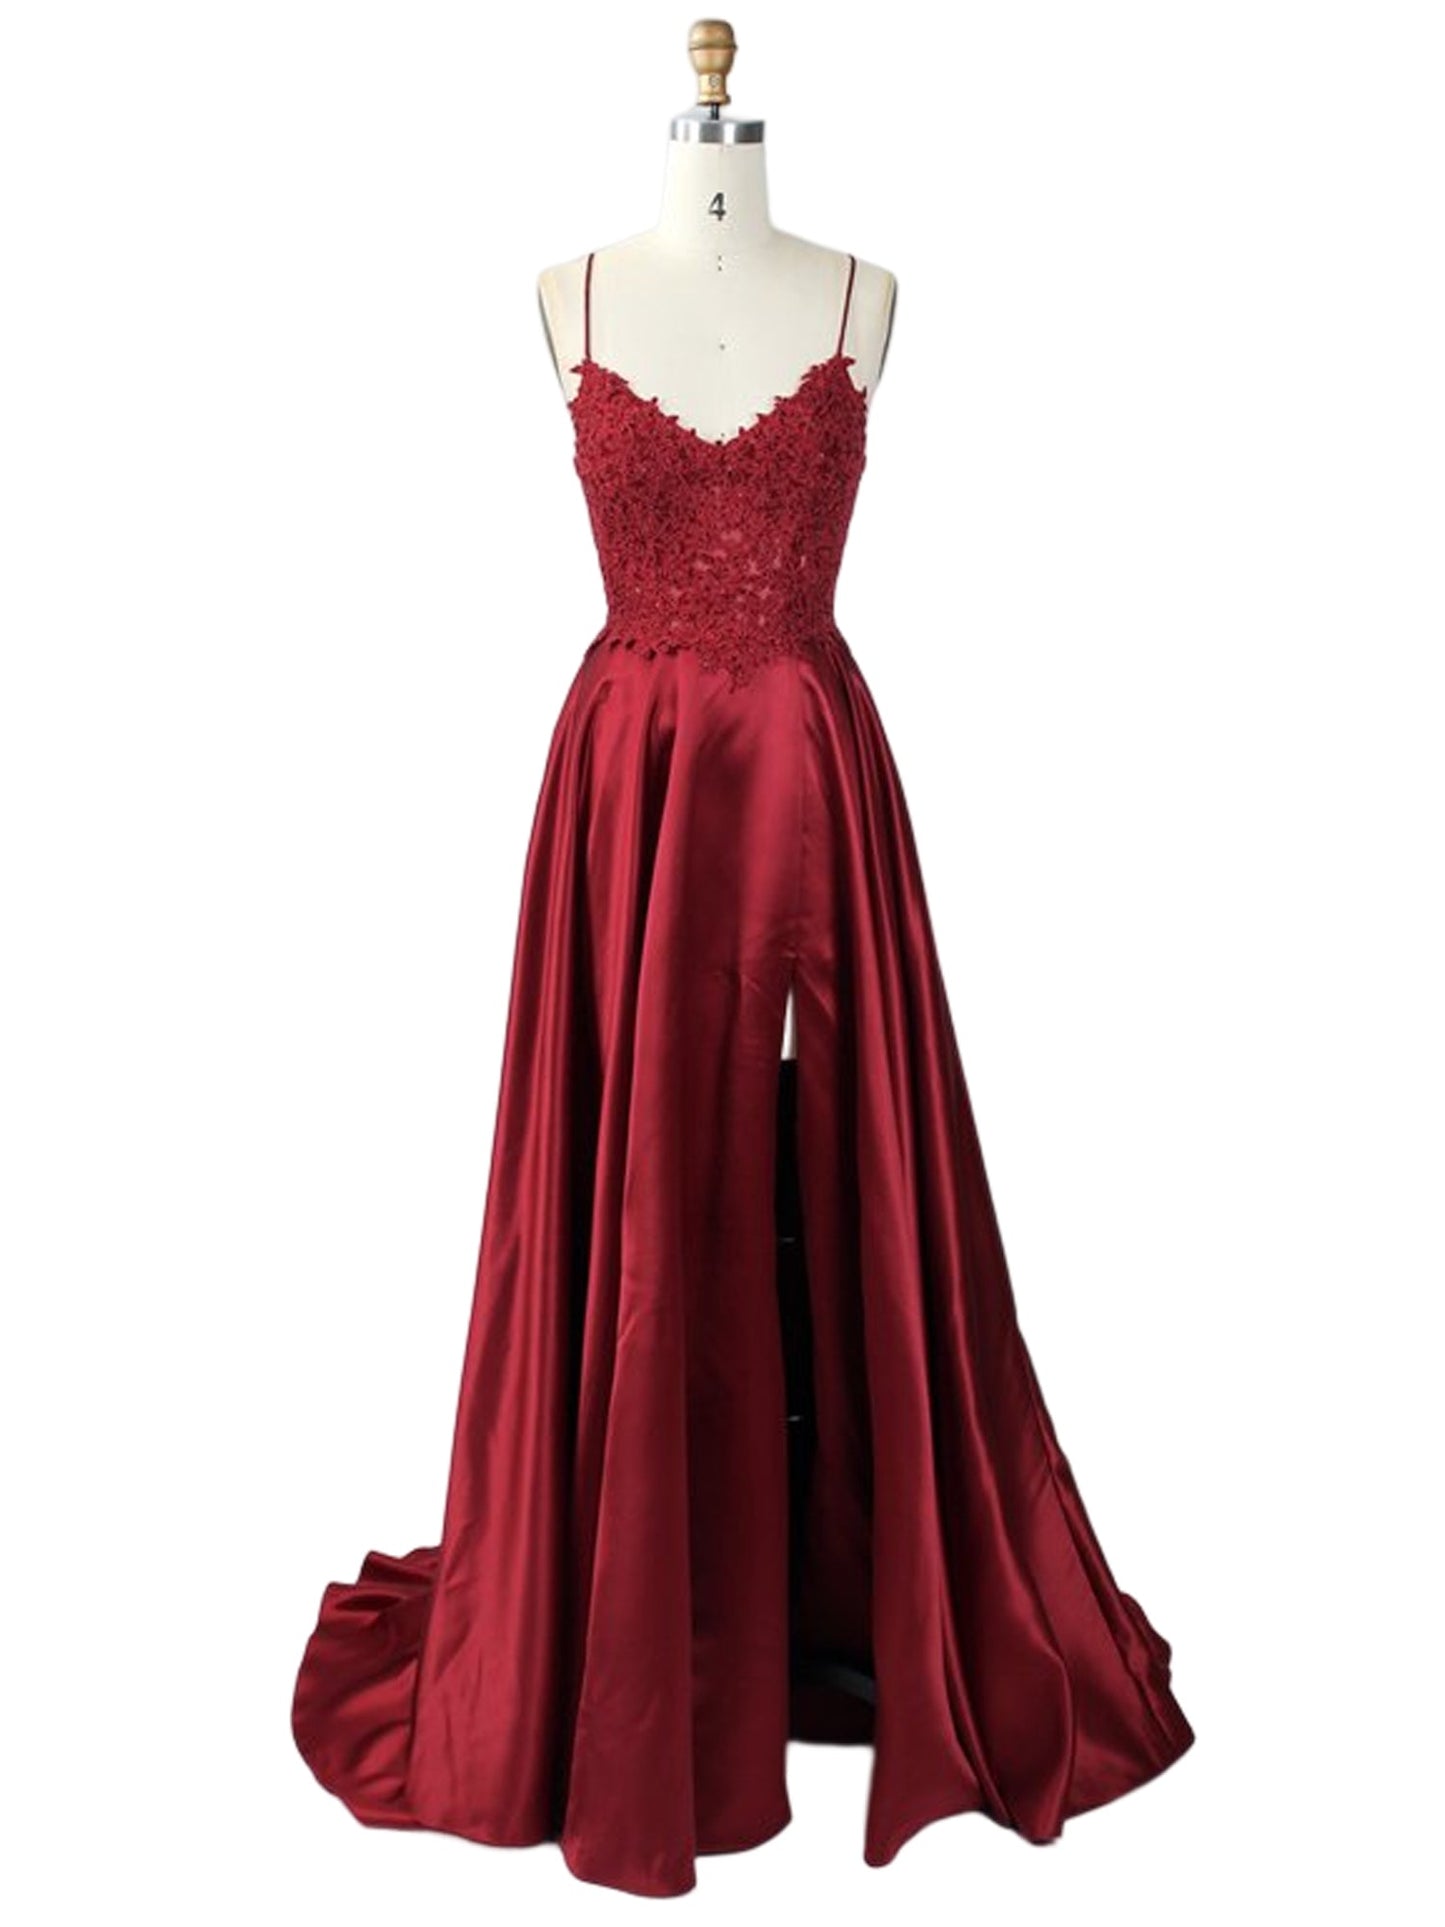 Lace Empire V-Neck Sleeveless Prom Dress-GD101504